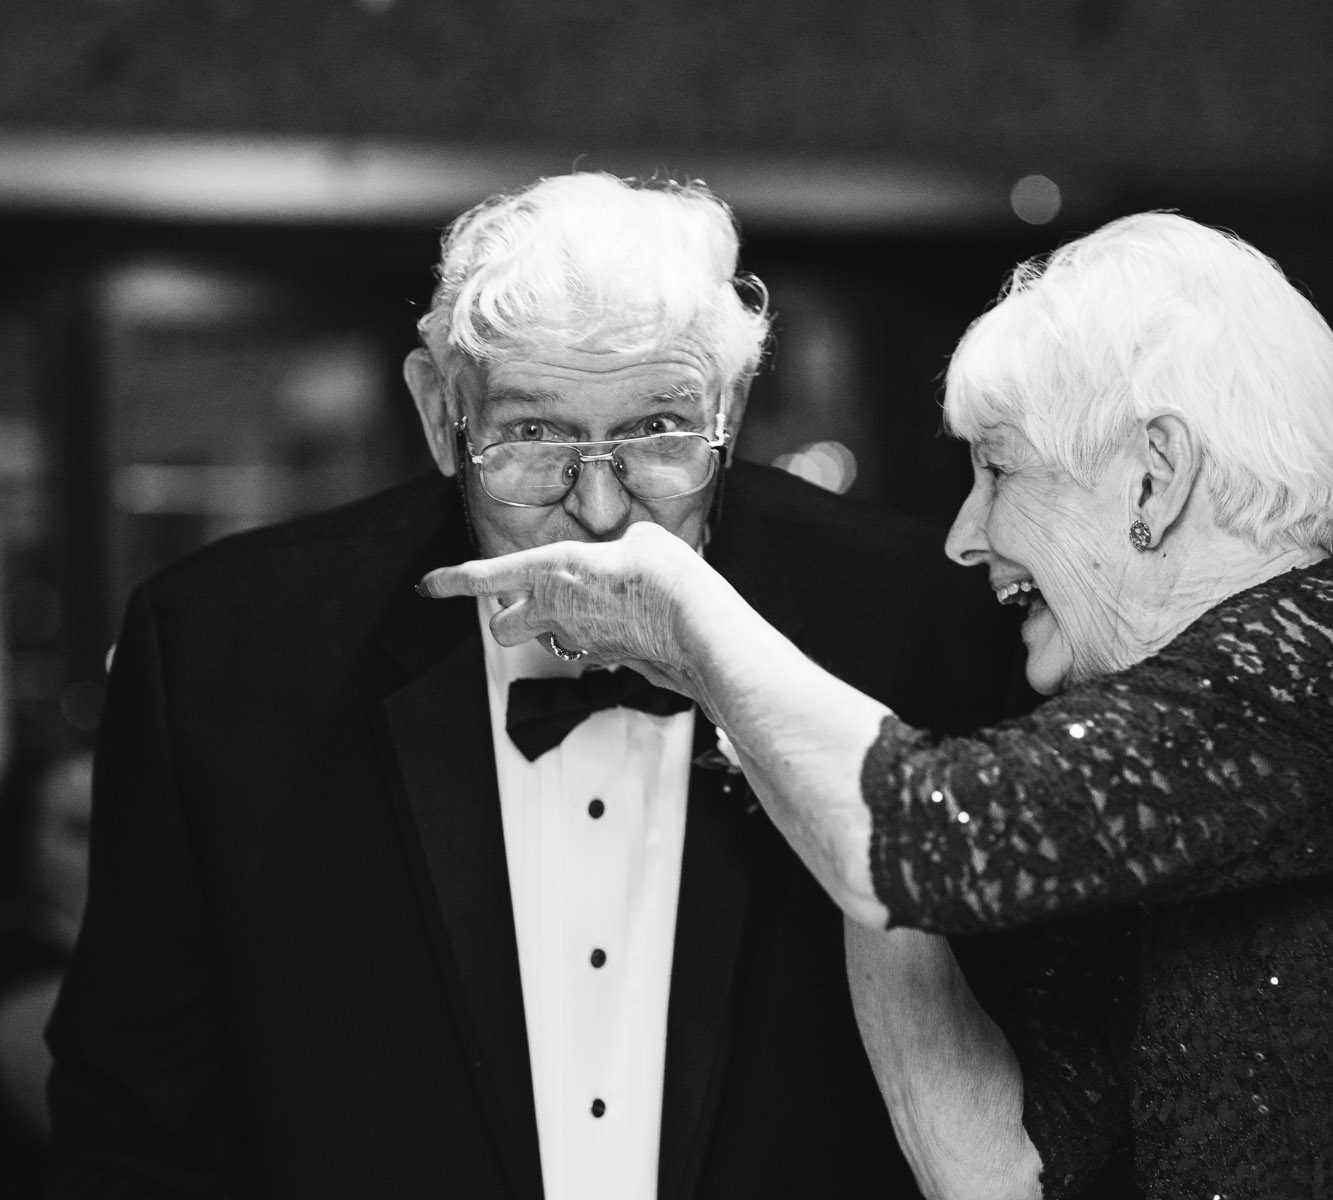 77 year old bride feeds groom at wedding reception